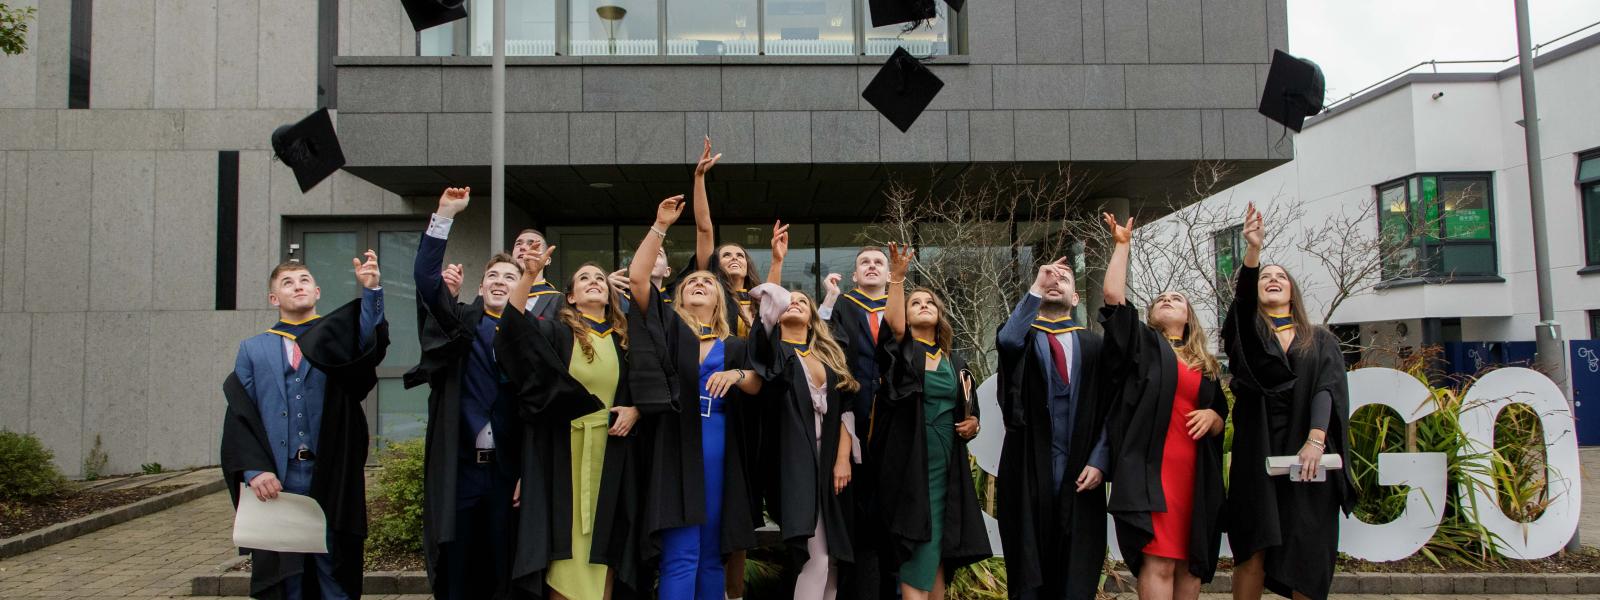 Students graduating from ATU Sligo campus throwing their graduation caps in the air